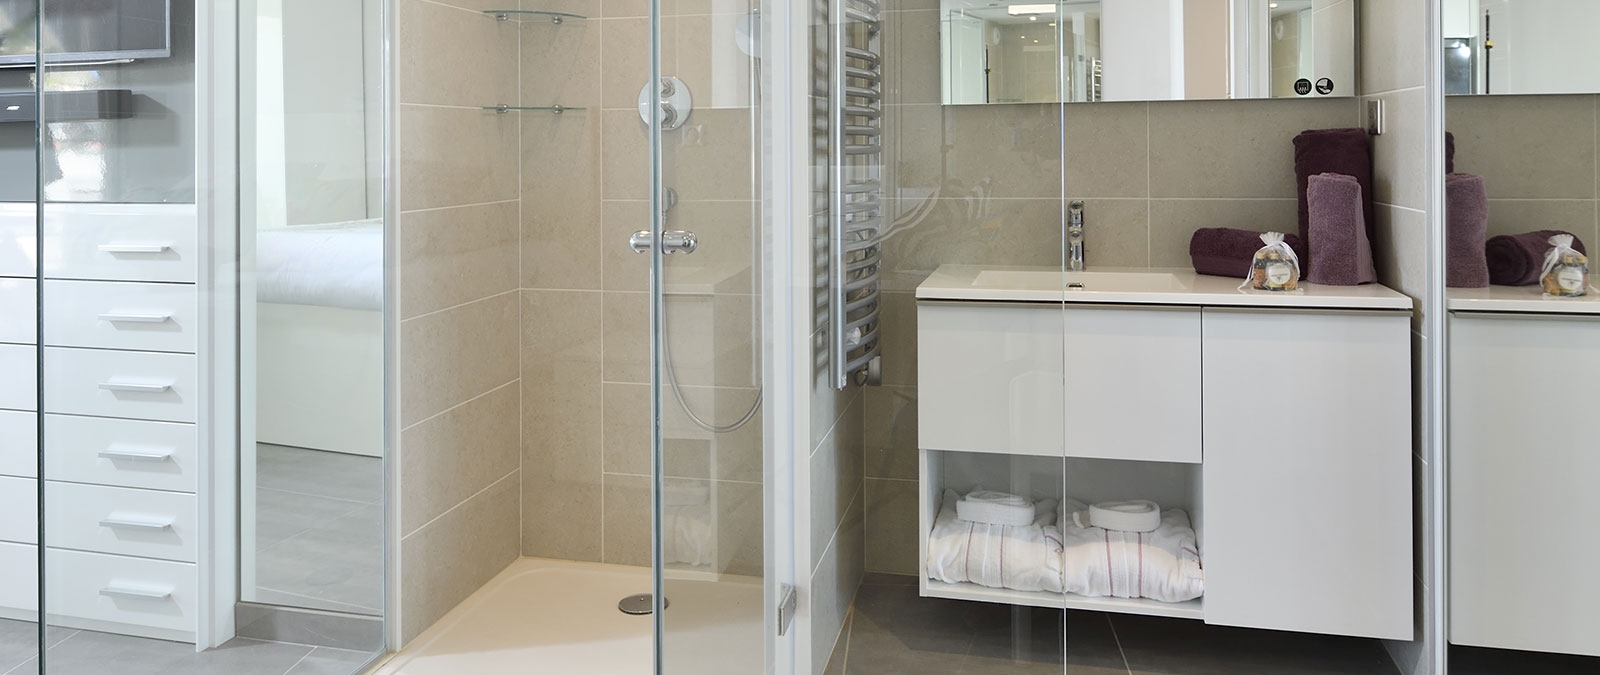 Bathroom area with Italian-style shower premium junior suite on the ground floor